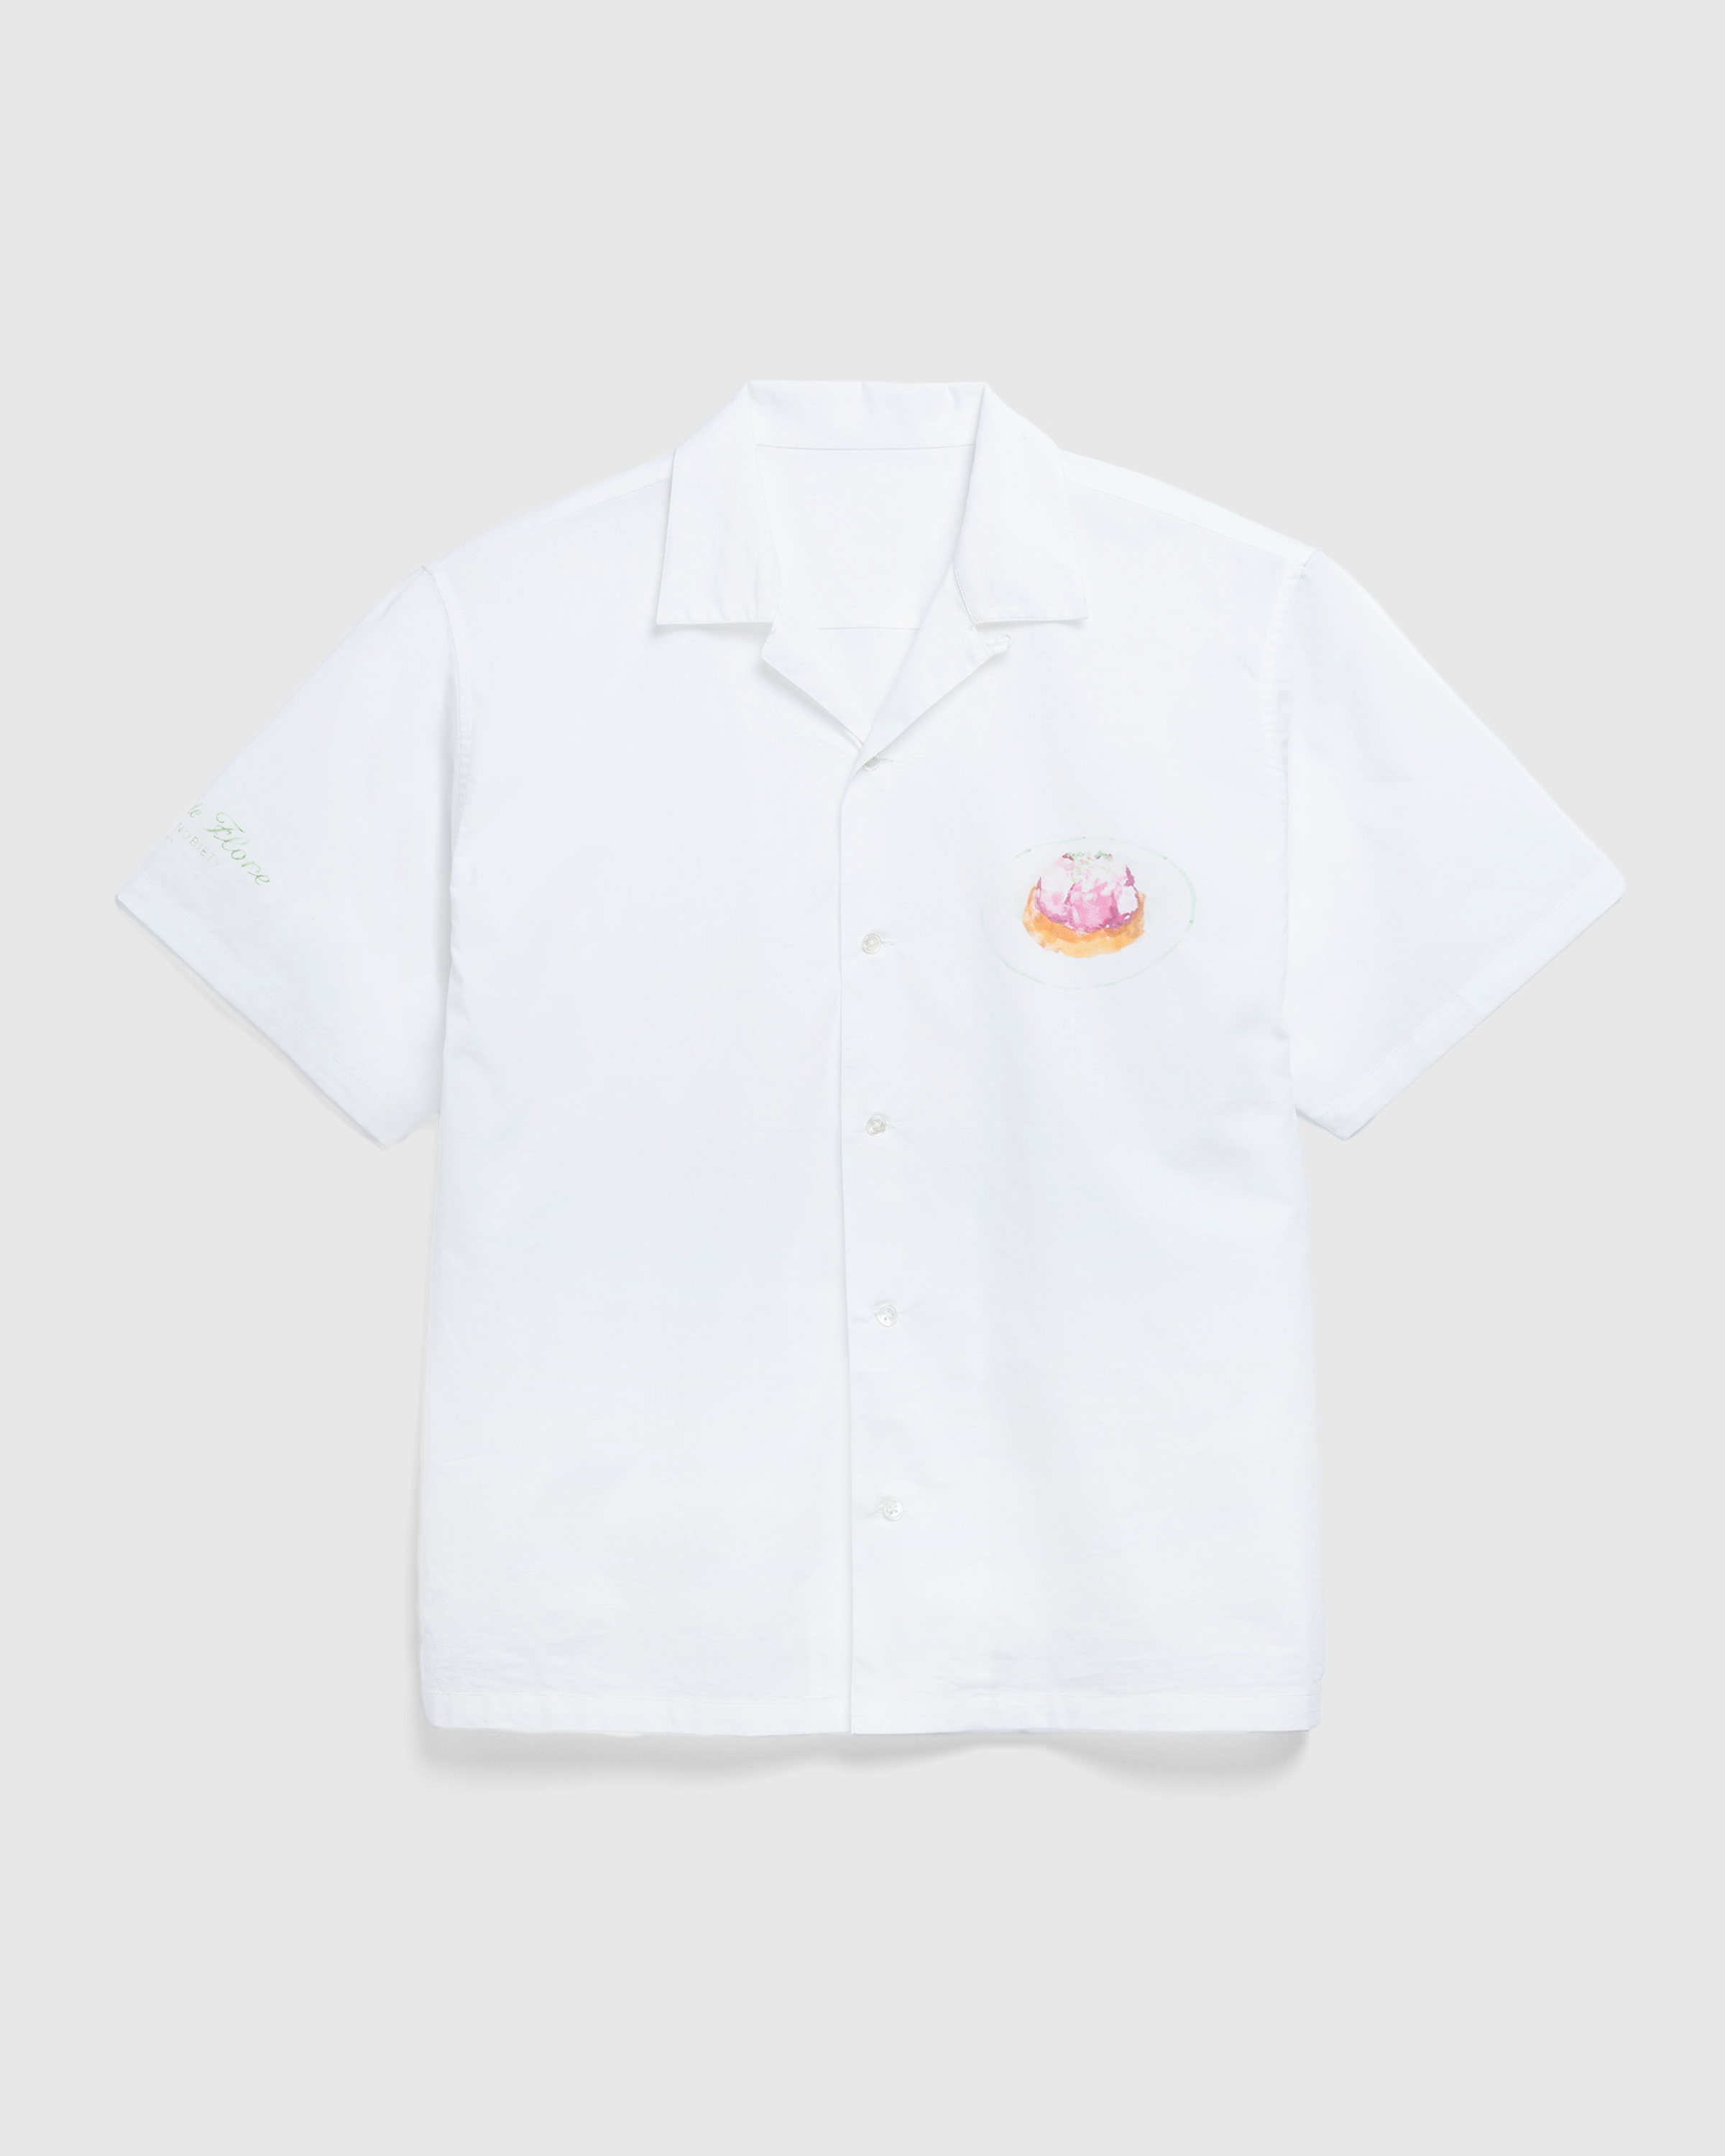 Café de Flore x Highsnobiety – Dessert Shirt White - Shortsleeve Shirts - White - Image 1